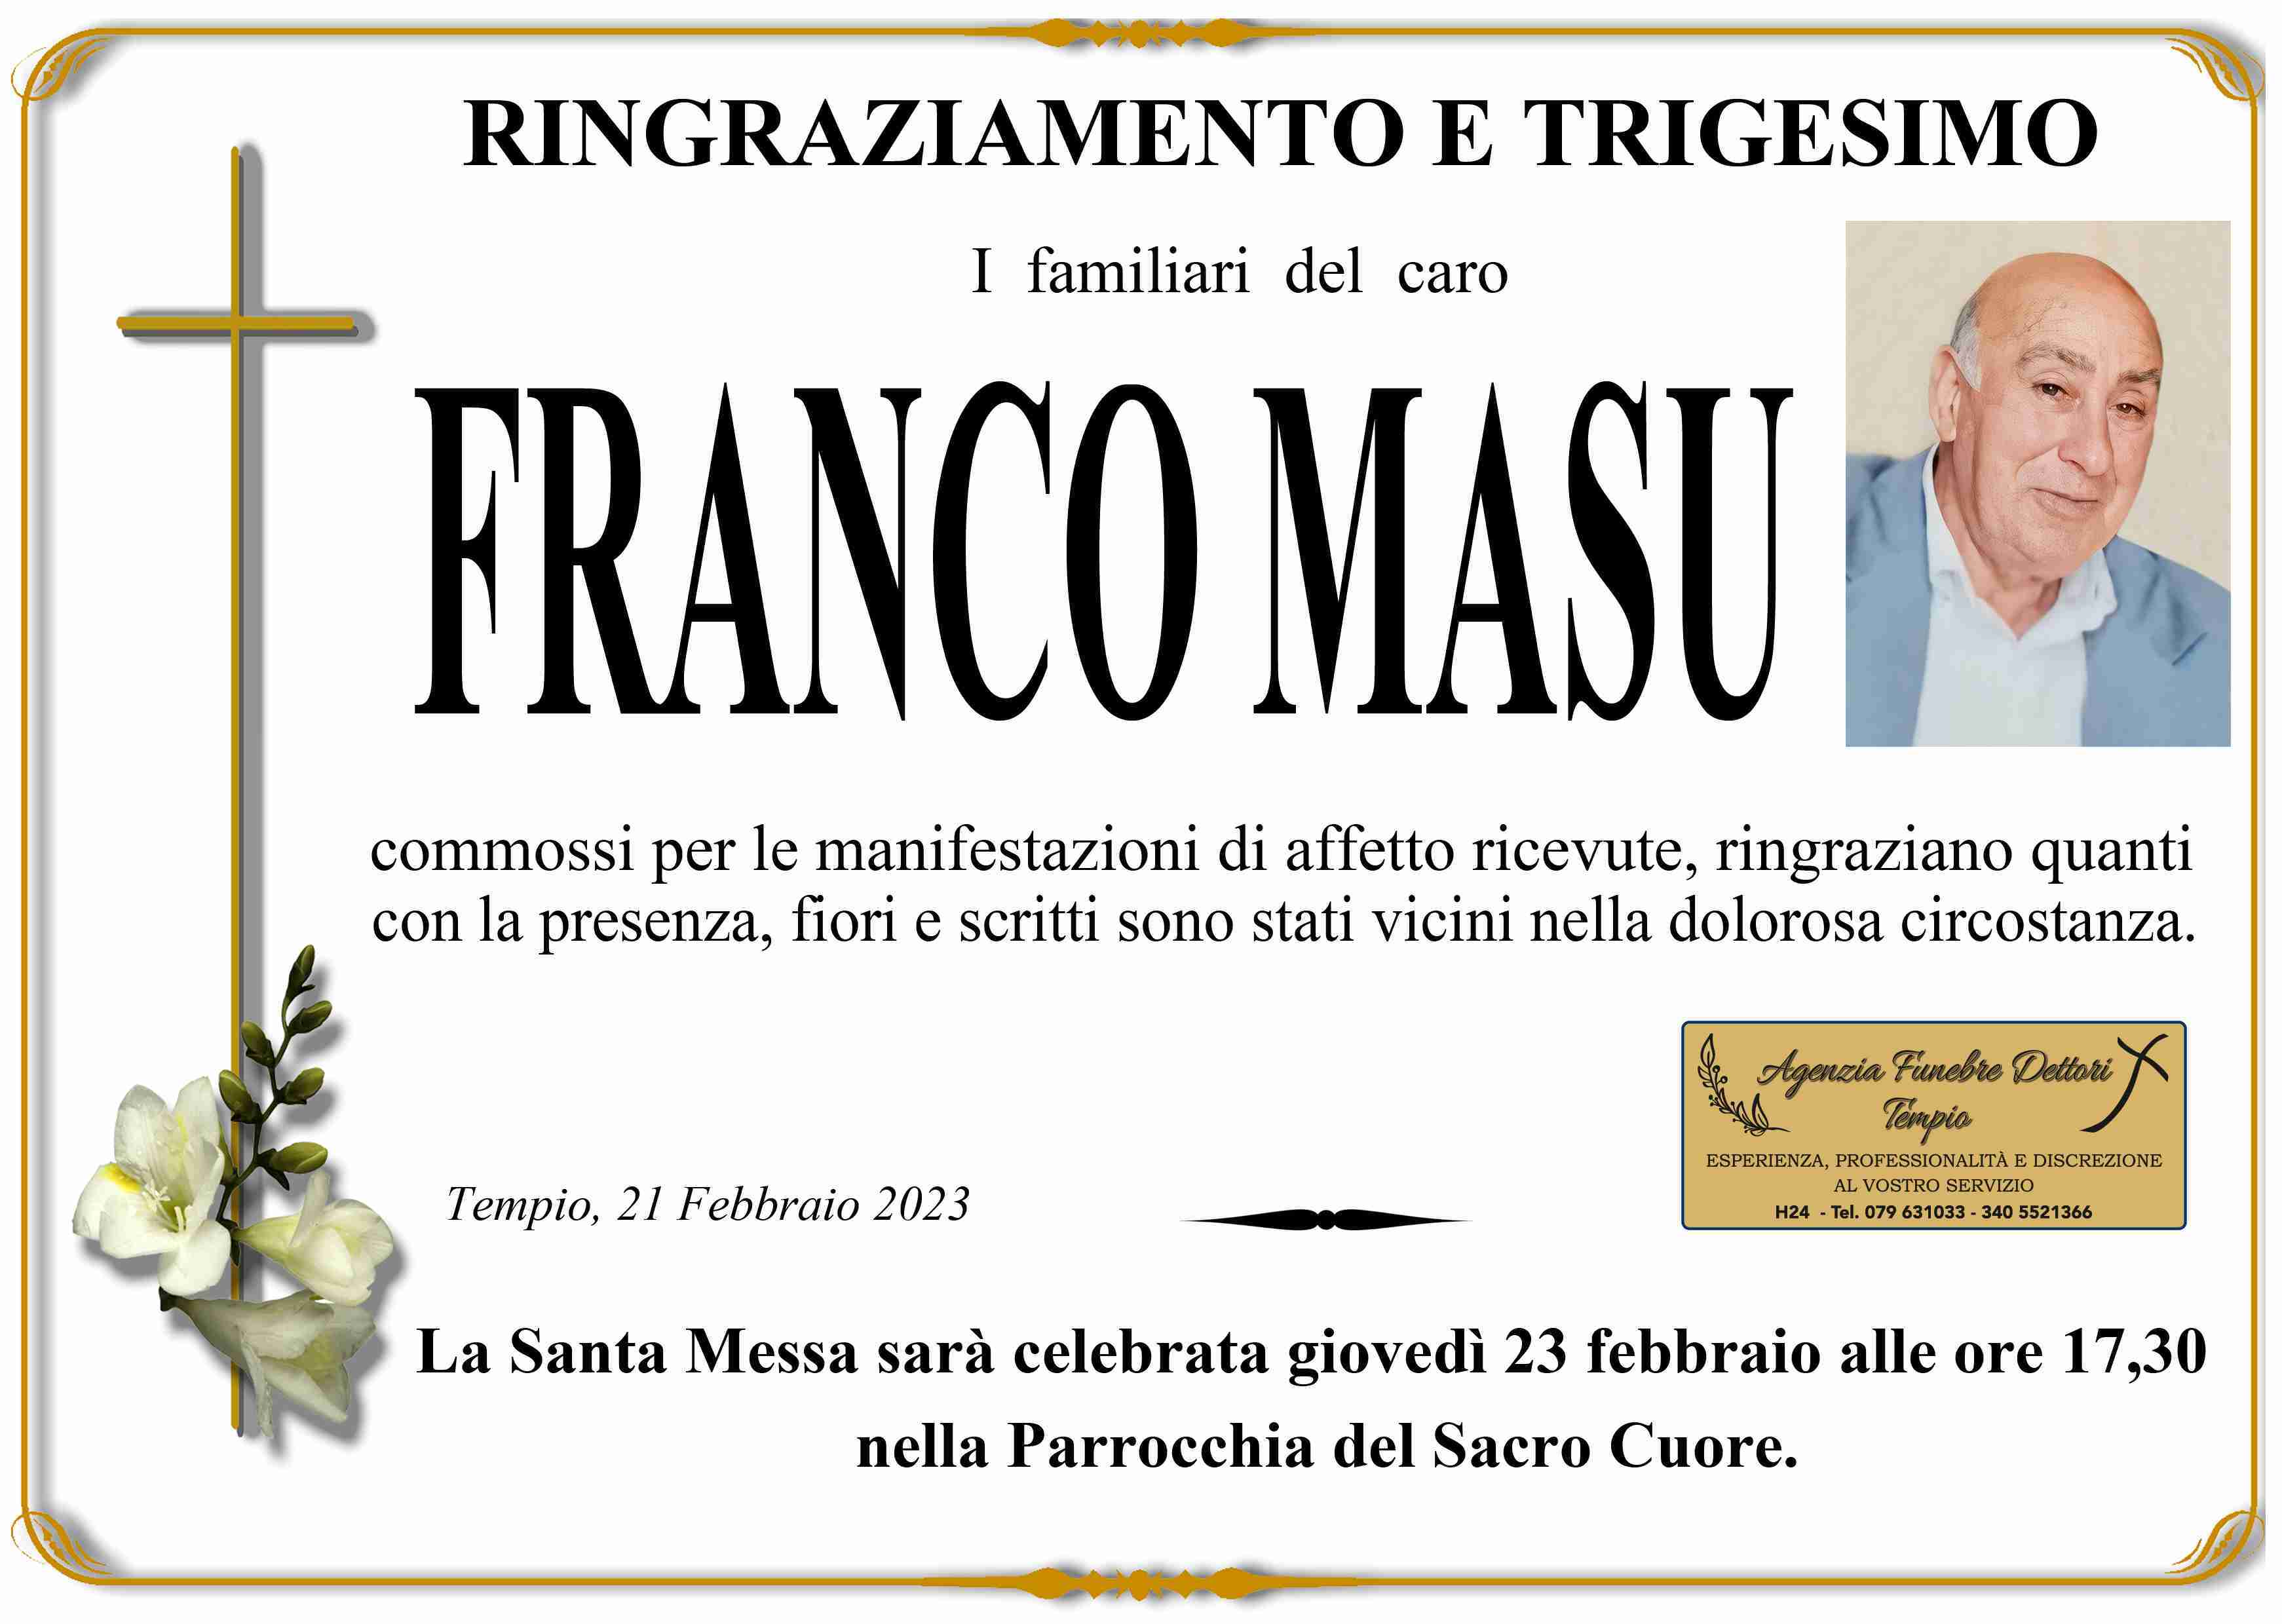 Franco Masu